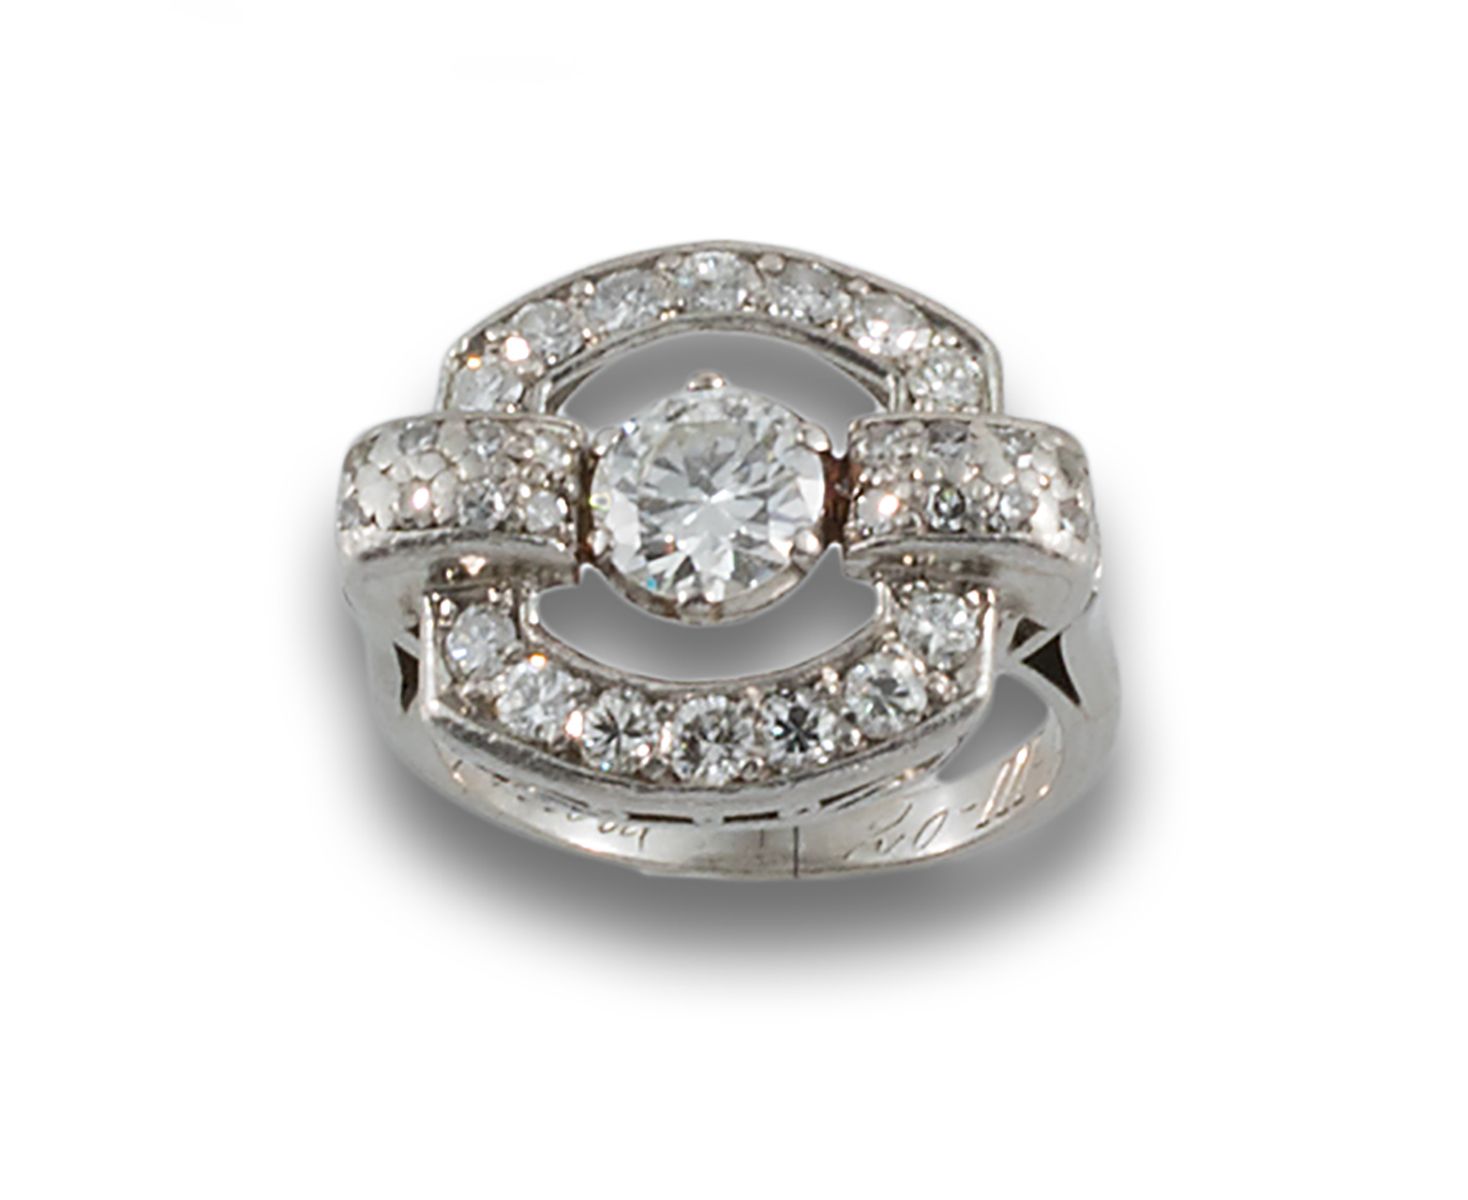 Ring, Art Deco style with openwork platinum setting. 新艺术运动铂金胸针，镶嵌明亮型和玫瑰型钻石。